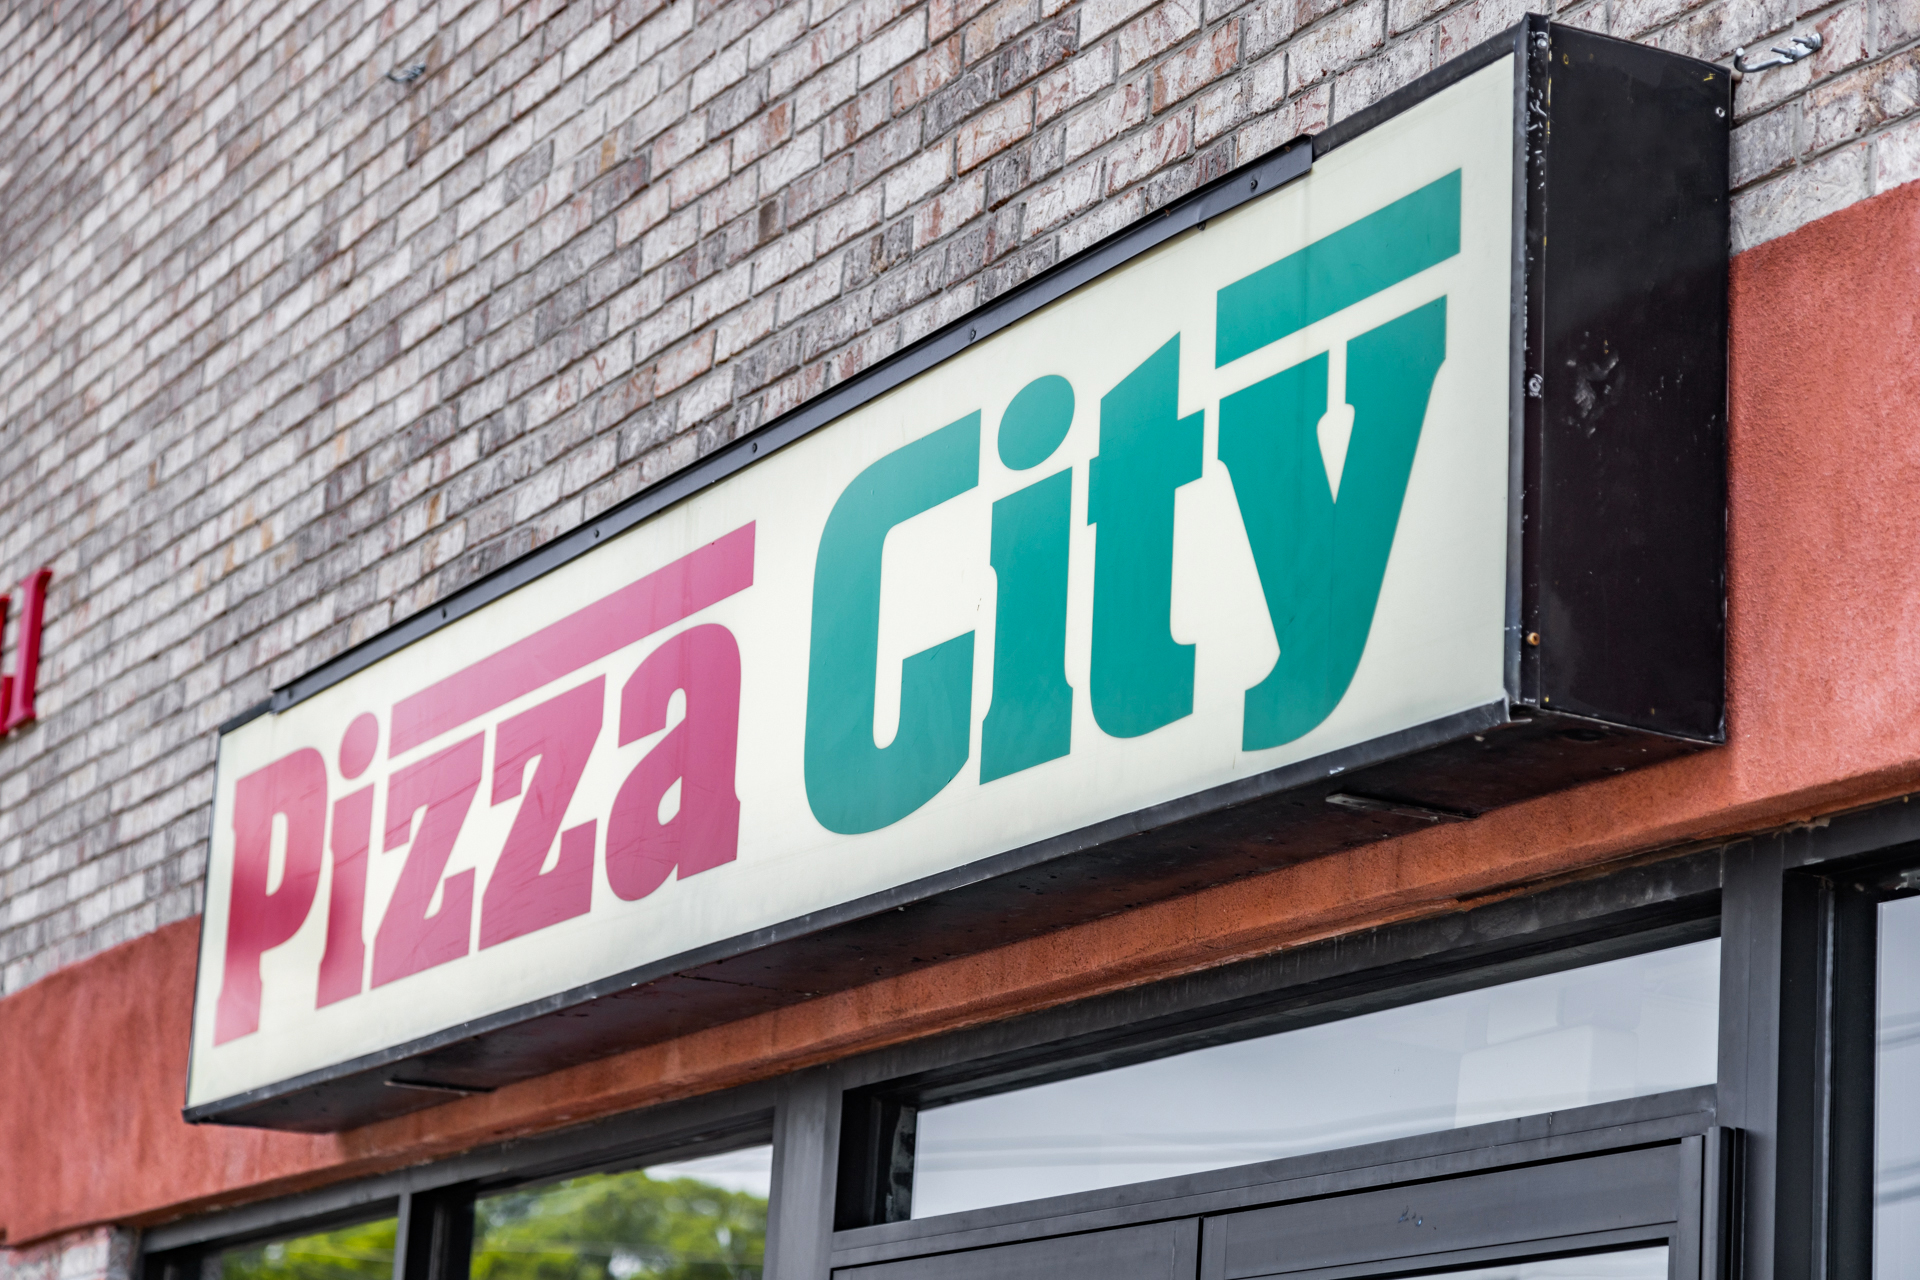 Pizza City! 